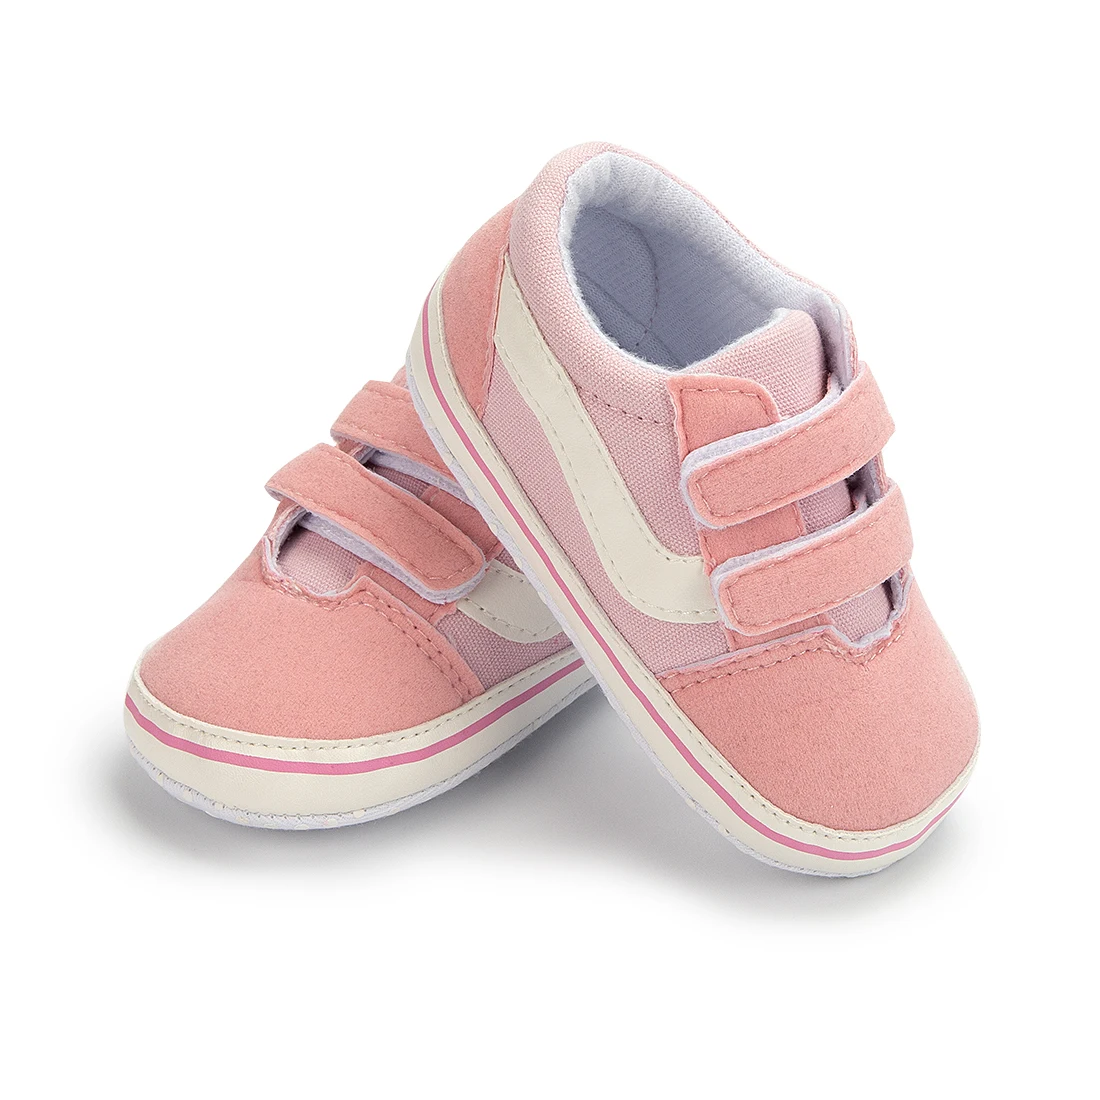 2023 New design indoor baby all-season non-slip soft sole baby shoes plaid denim newborn baby sneakers